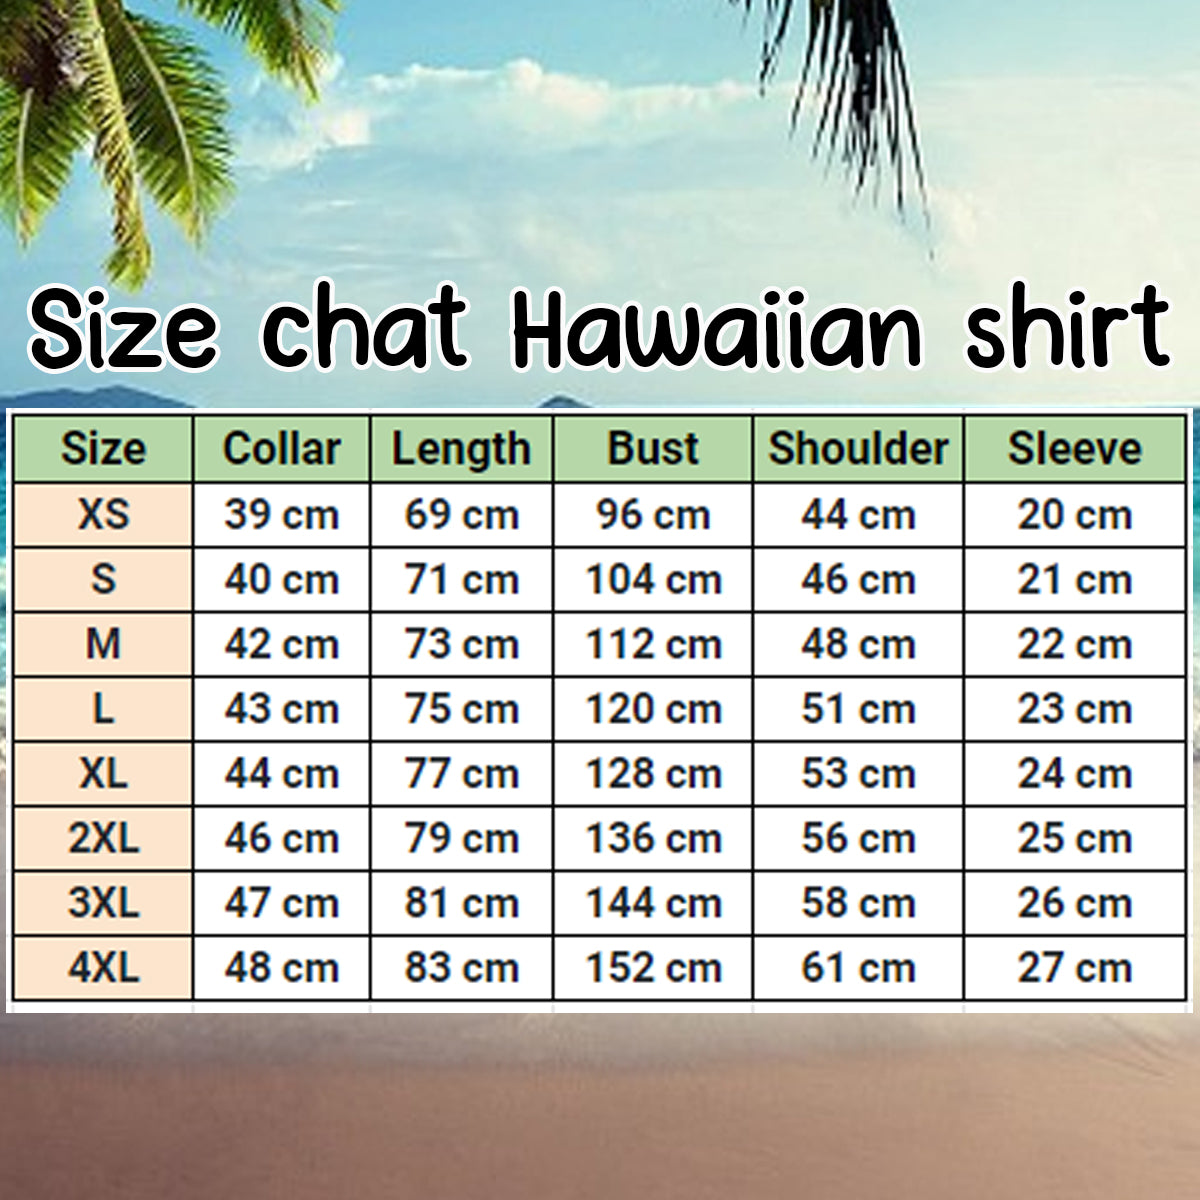 Wirehaired Vizsla Dog Lovers Gift Summer Beach Palm Tree Pattern Hawaiian Shirt